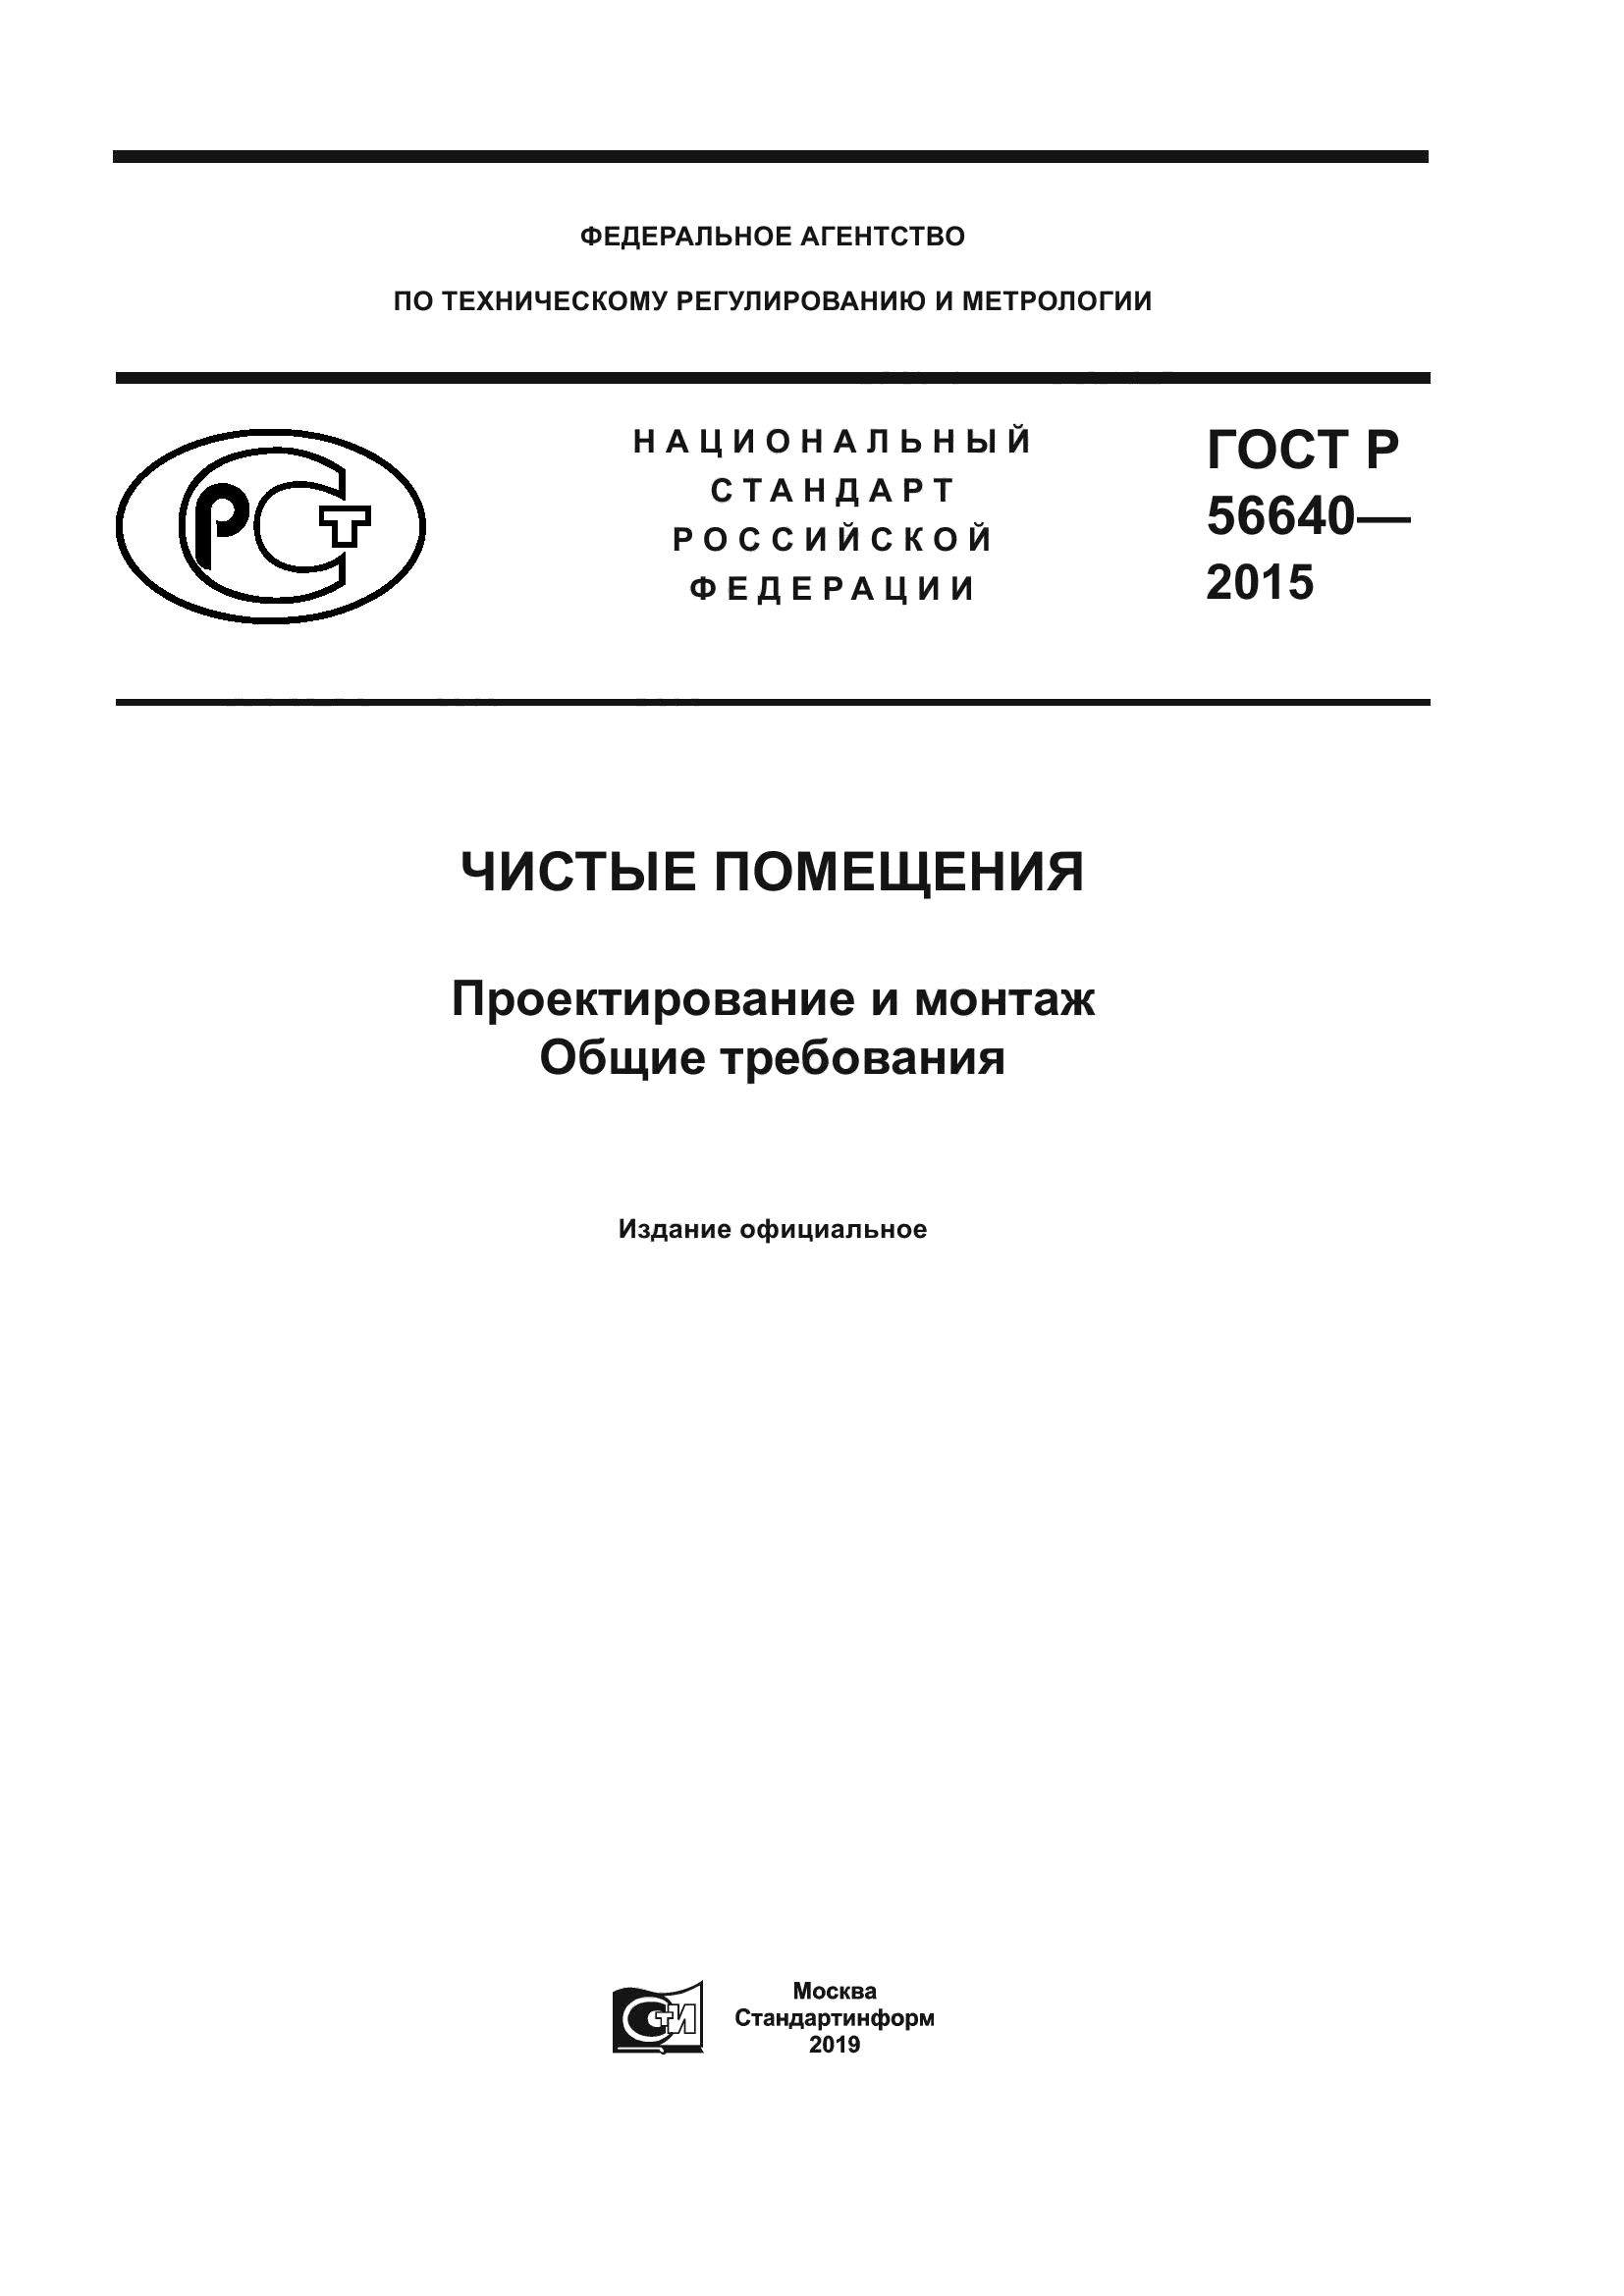 ГОСТ Р 56640-2015